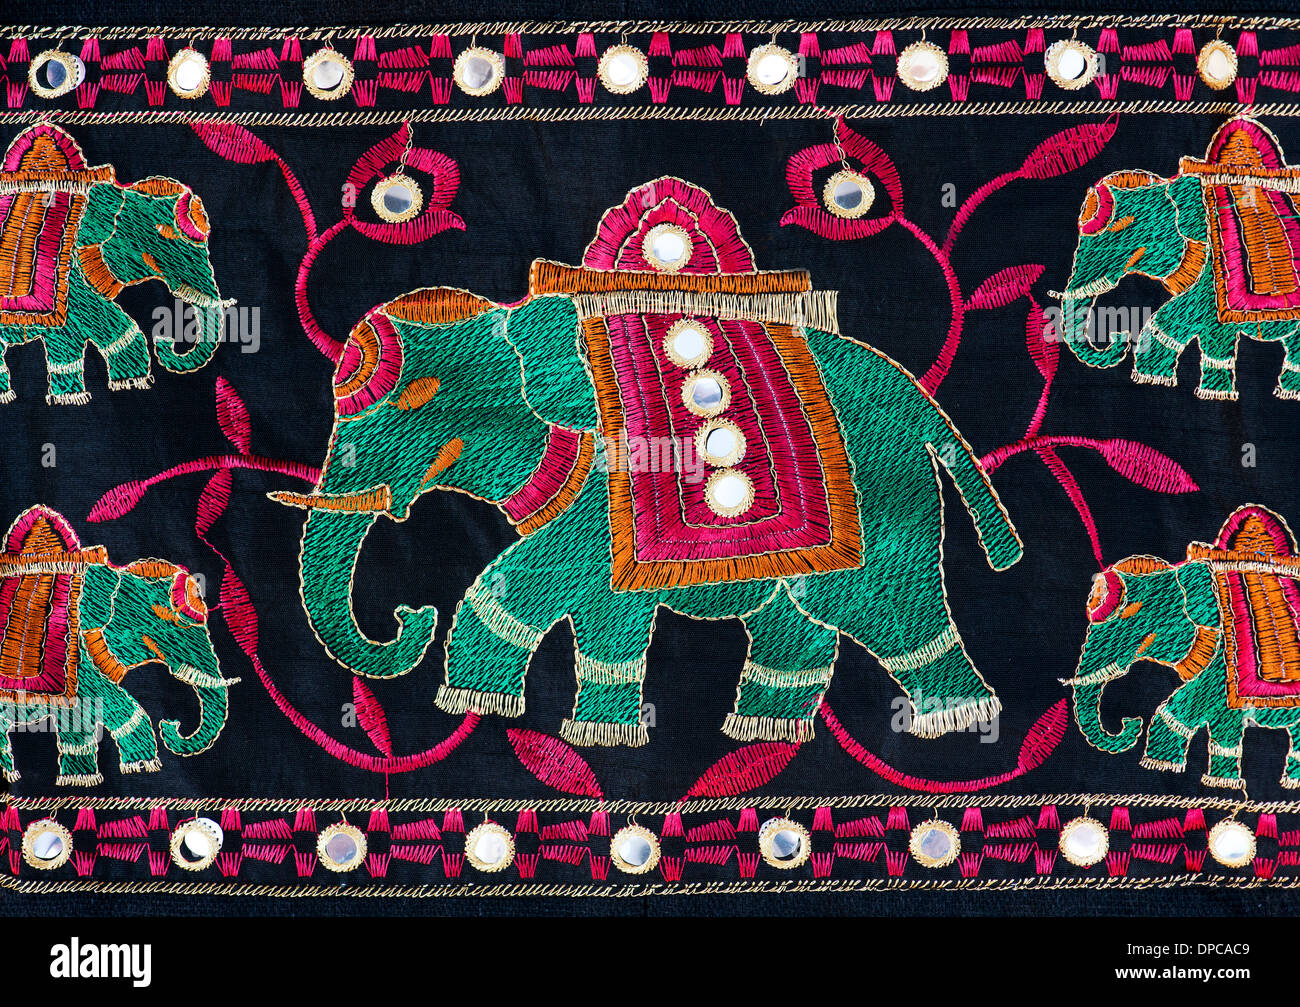 Indian handmade colourful fabric bag with elephant design Stock Photo